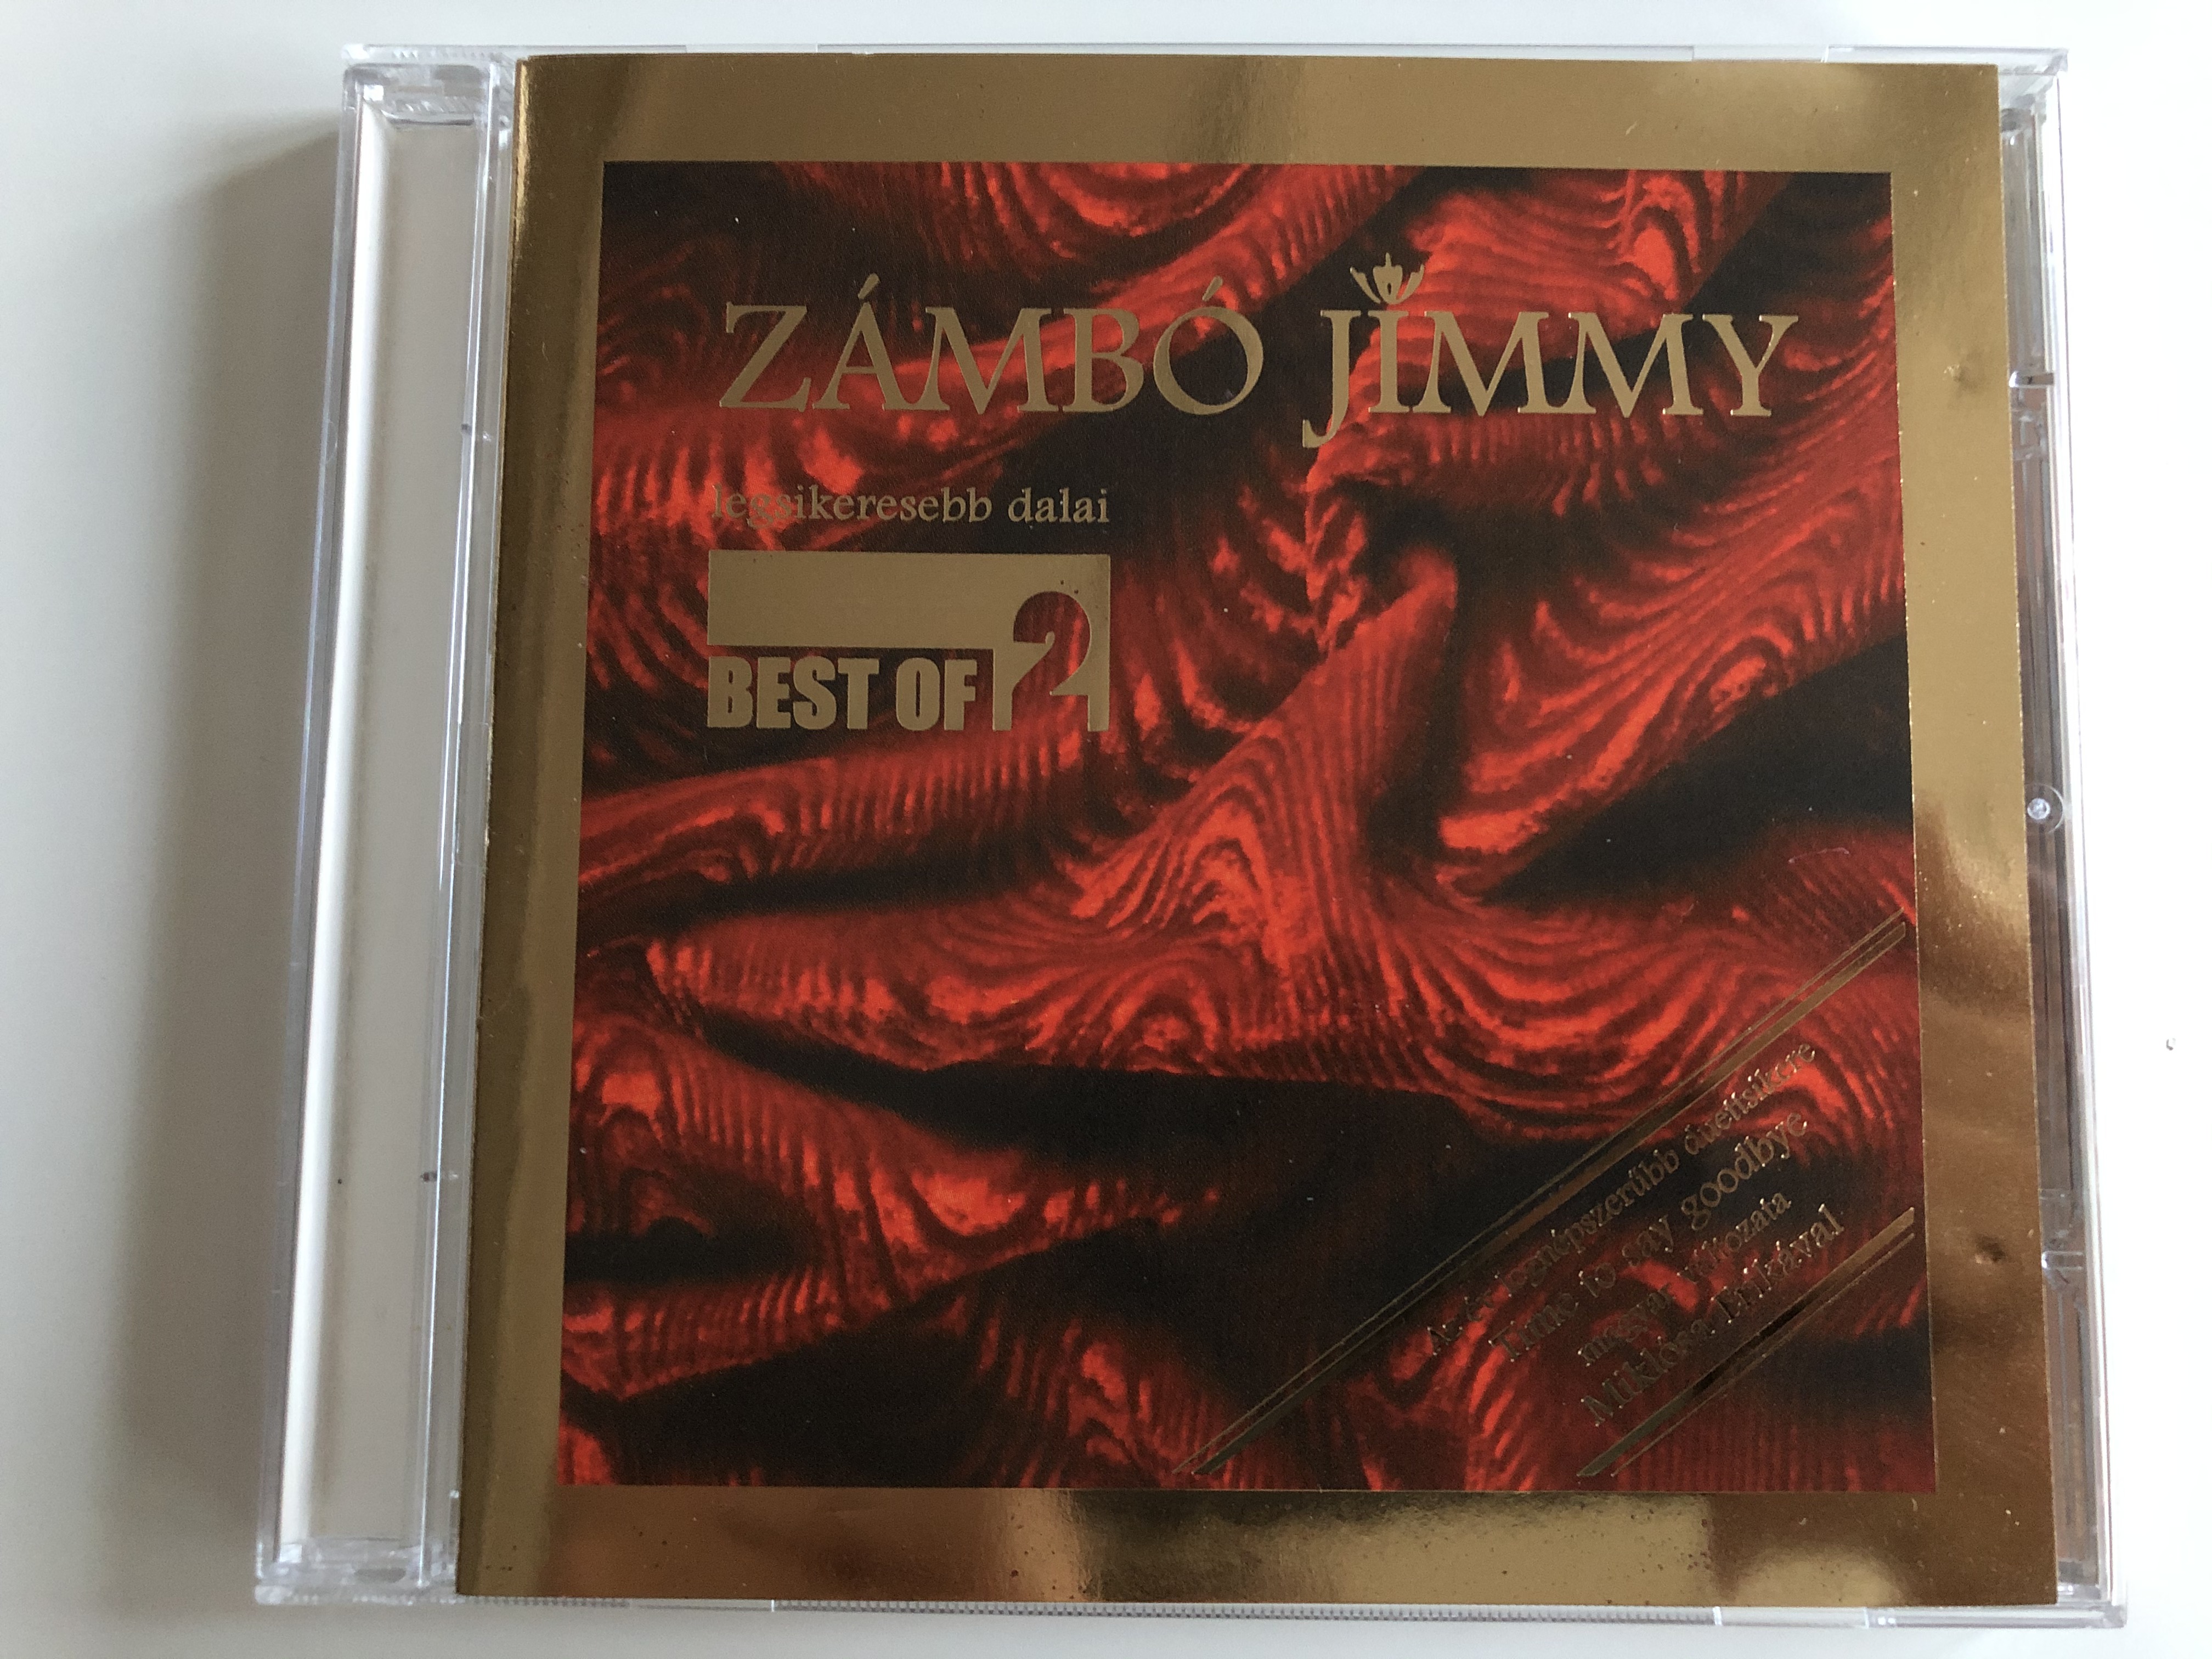 z-mb-jimmy-best-of-2-magneoton-audio-cd-1997-3984-21484-4-1-.jpg